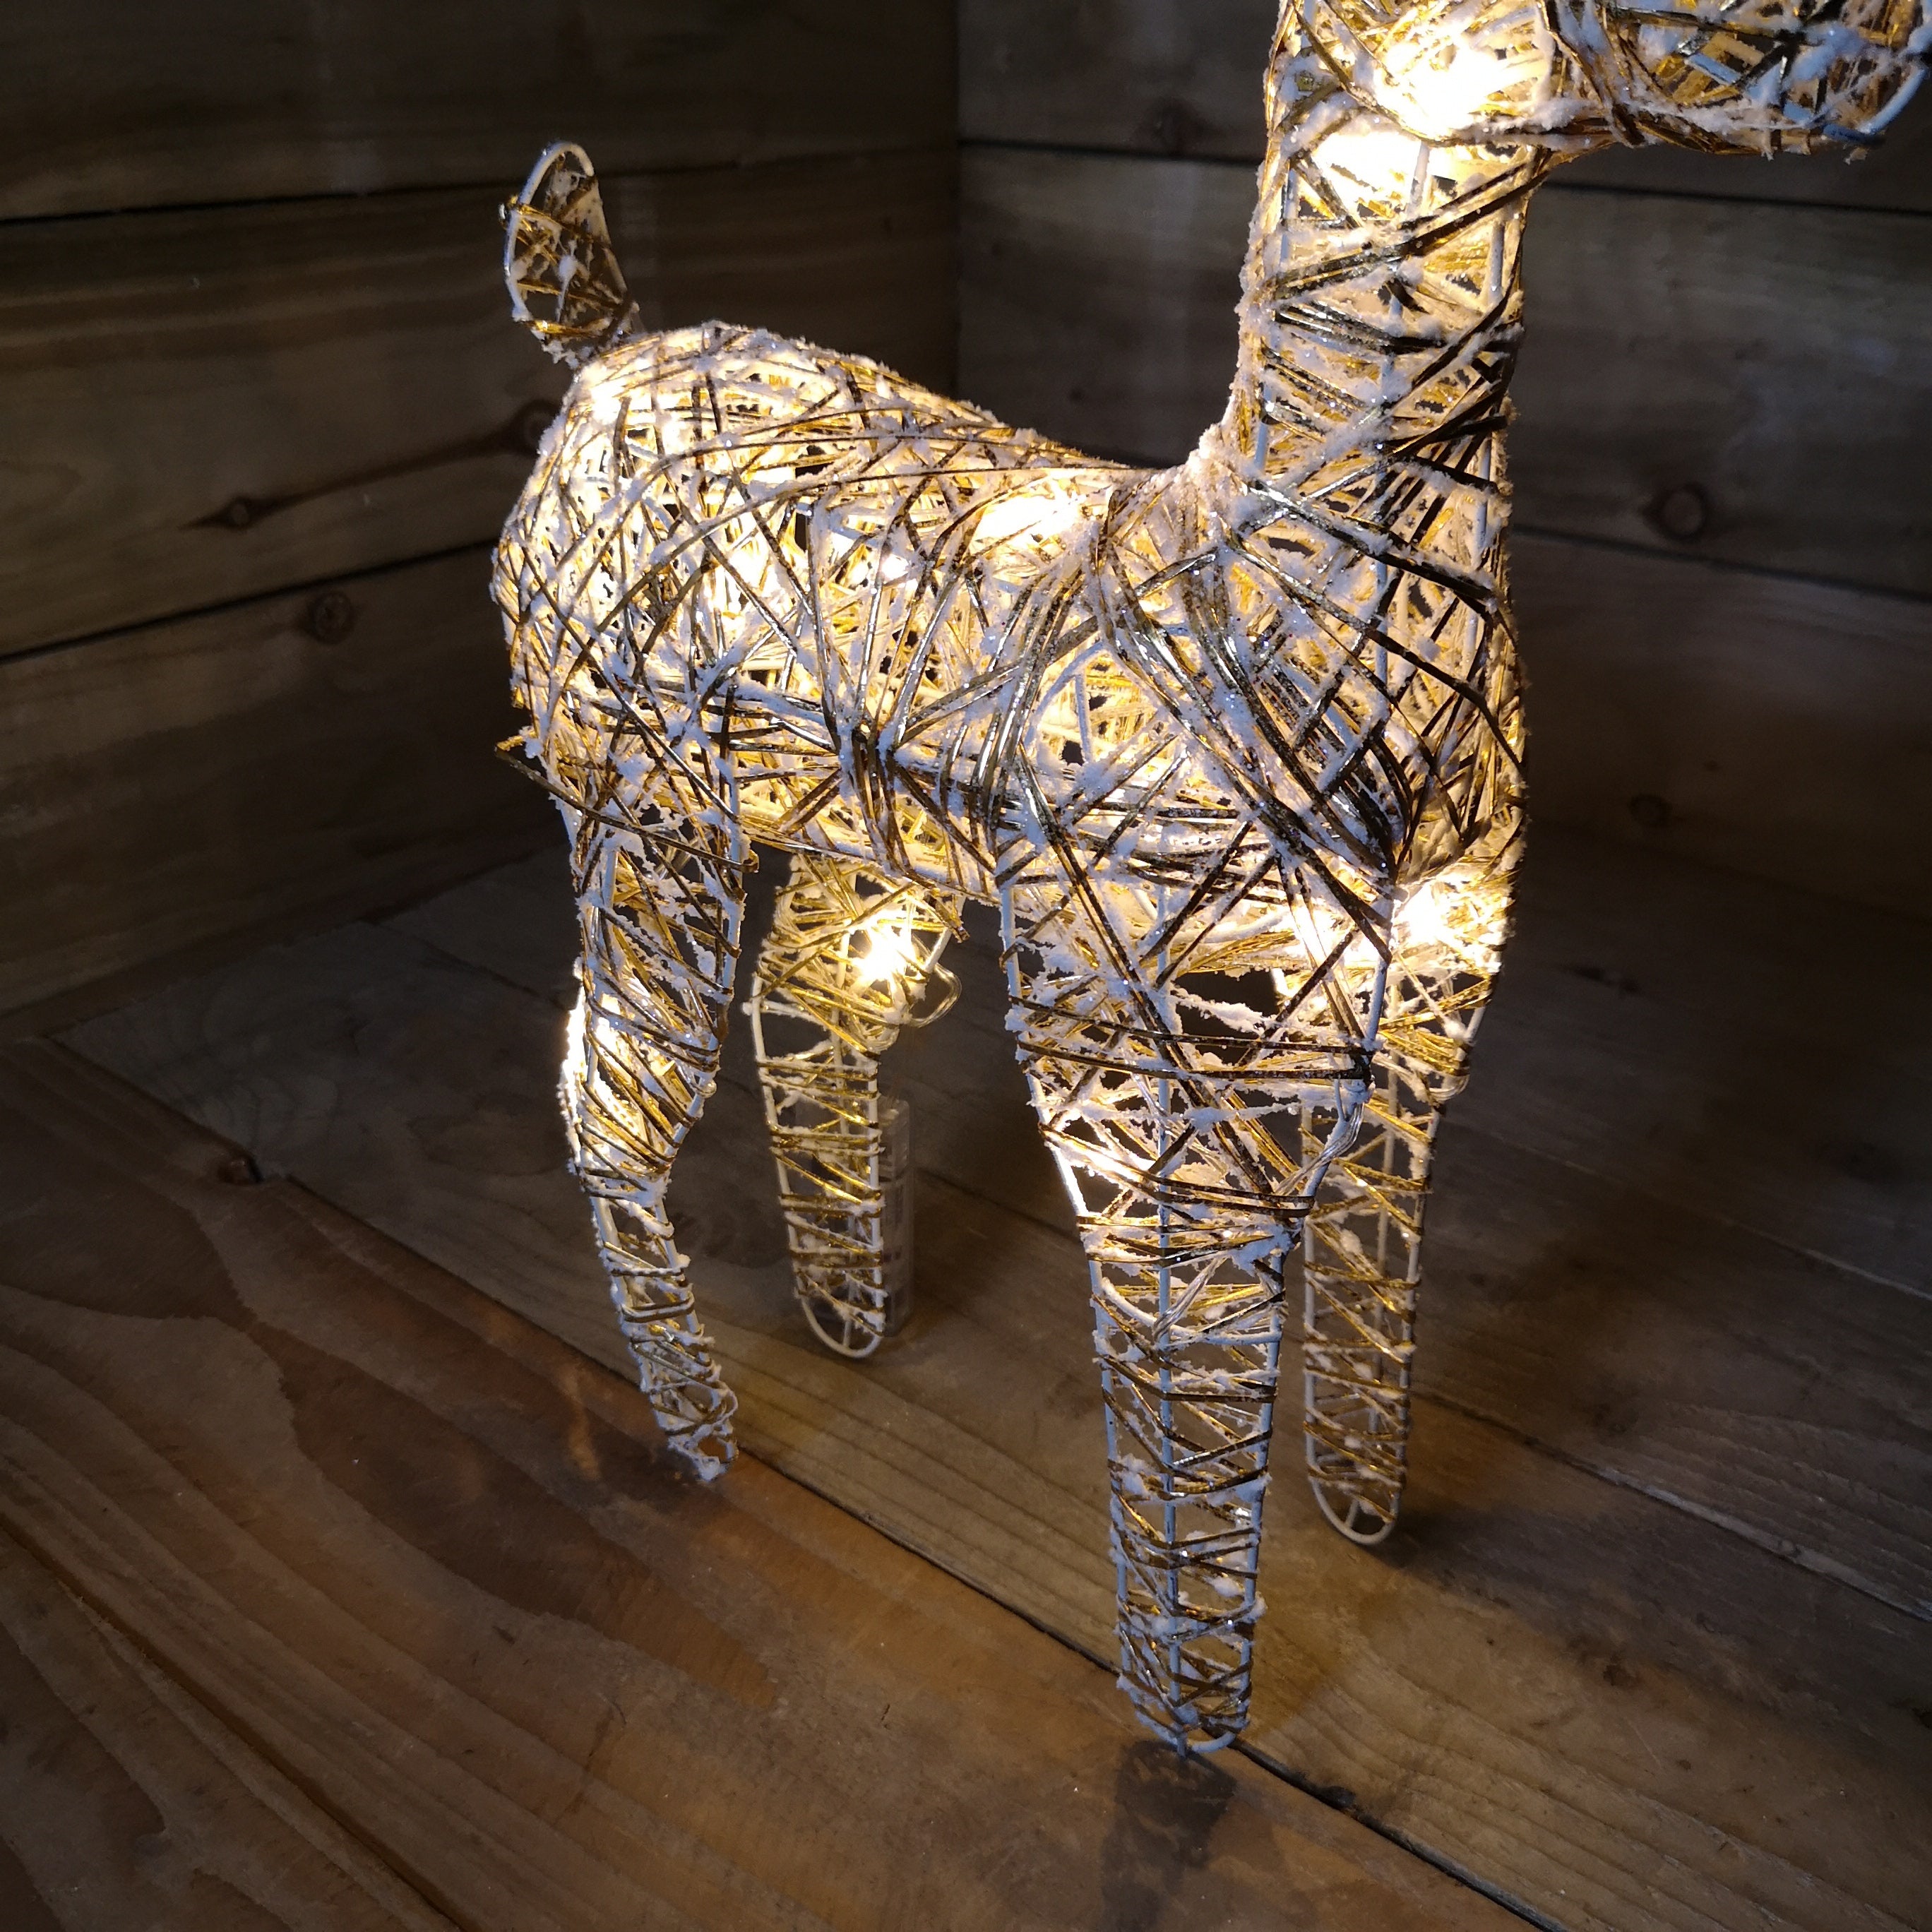 50cm Gold Wicker LED Illuminated Christmas Reindeer Figures Indoor Decoration